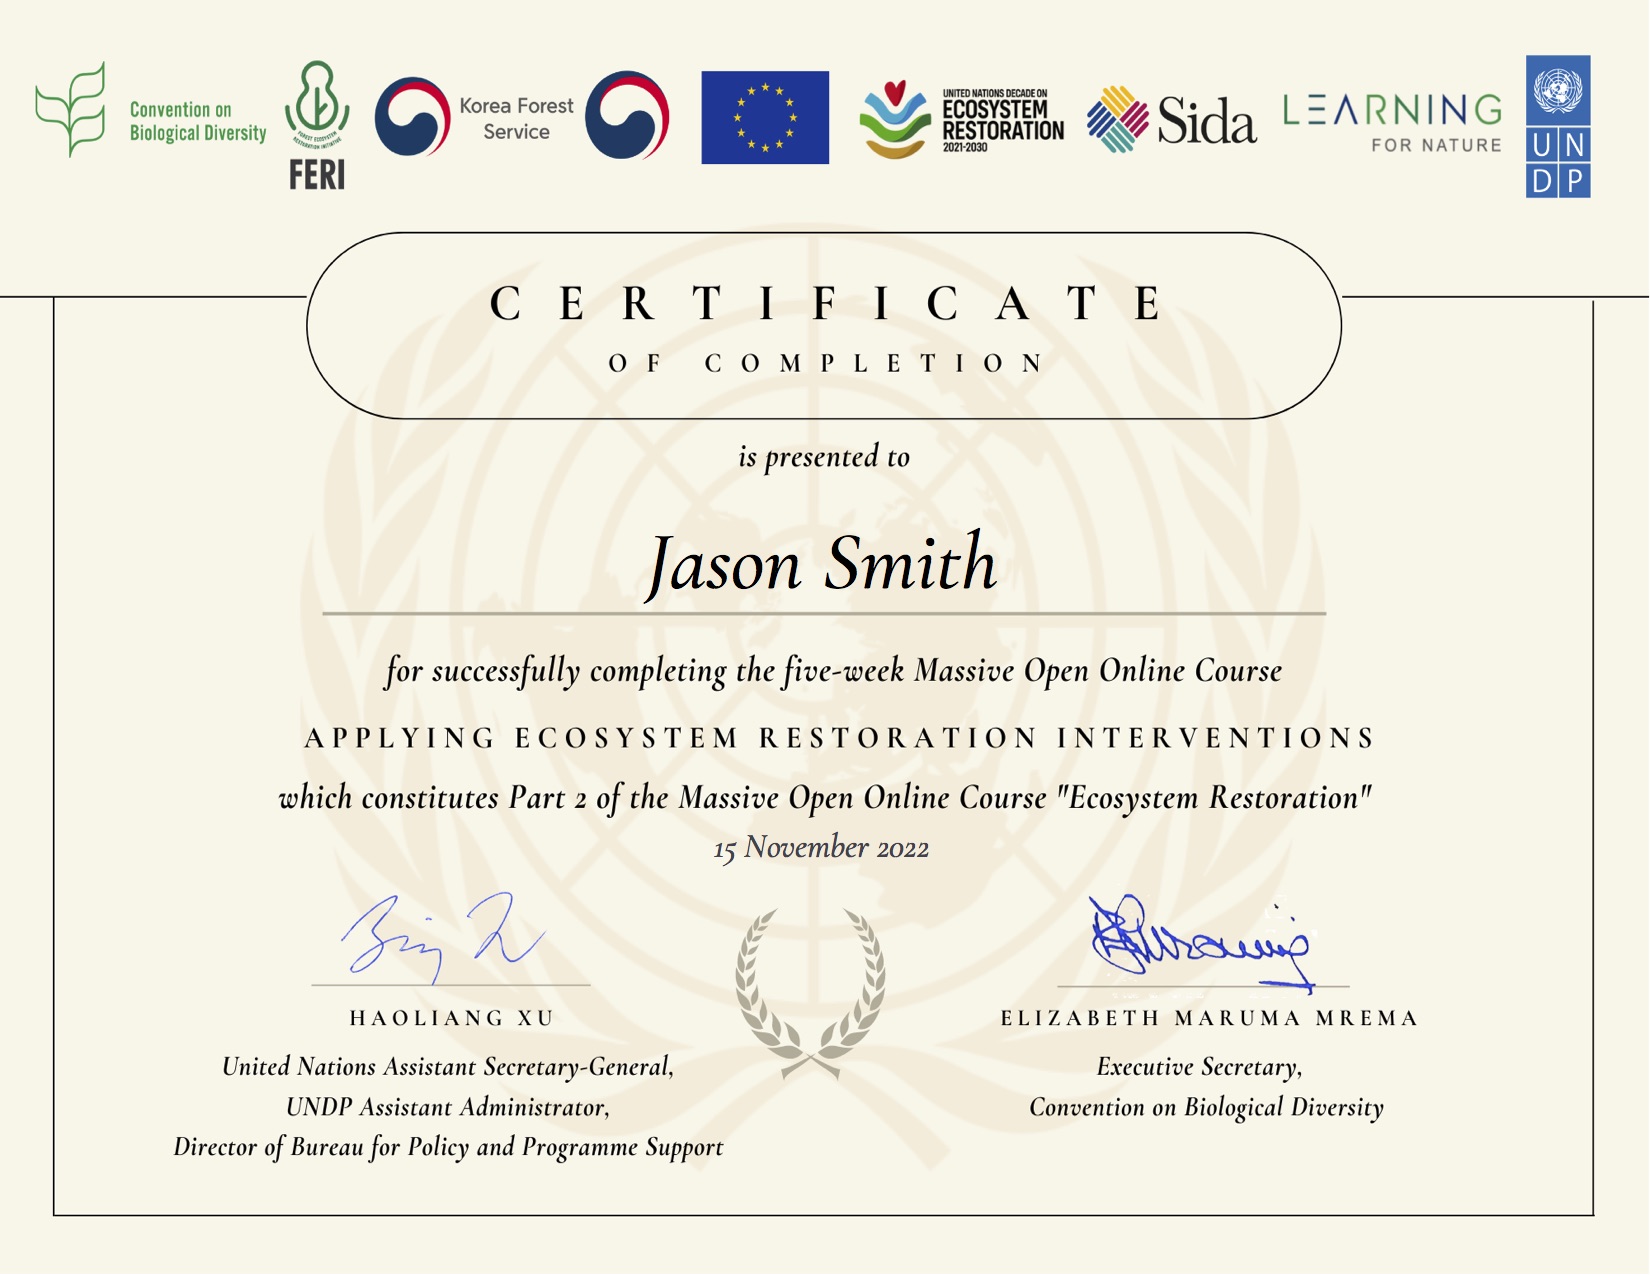 Jason-Smith-Ecosystem-Restoration-2022-Part-2-Ecosystem-Restoration-Part-2-2022-Learning-for-Nature